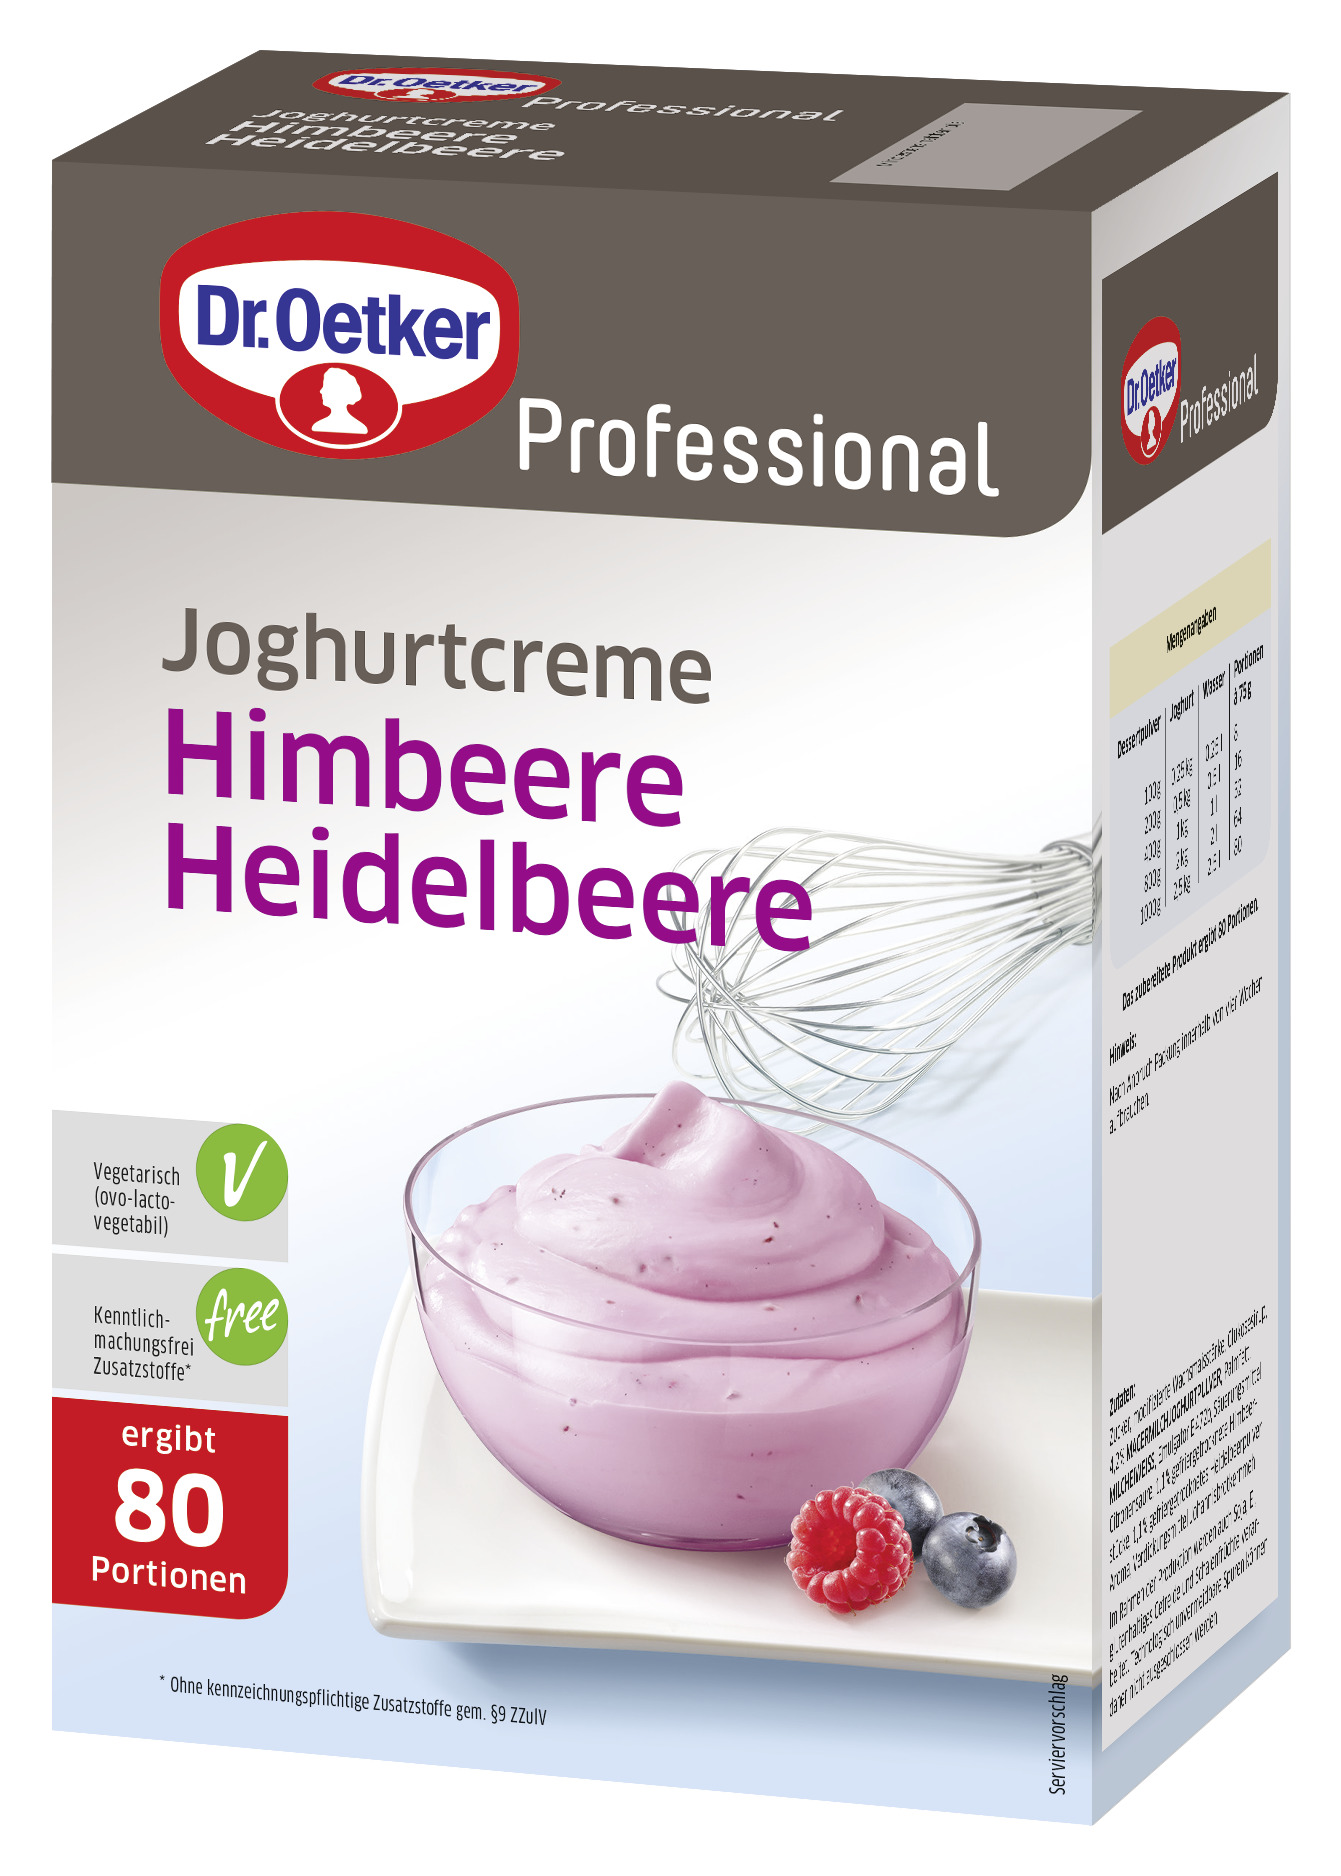 Joghurtcreme Himbeere - Heidelbeere 1000g